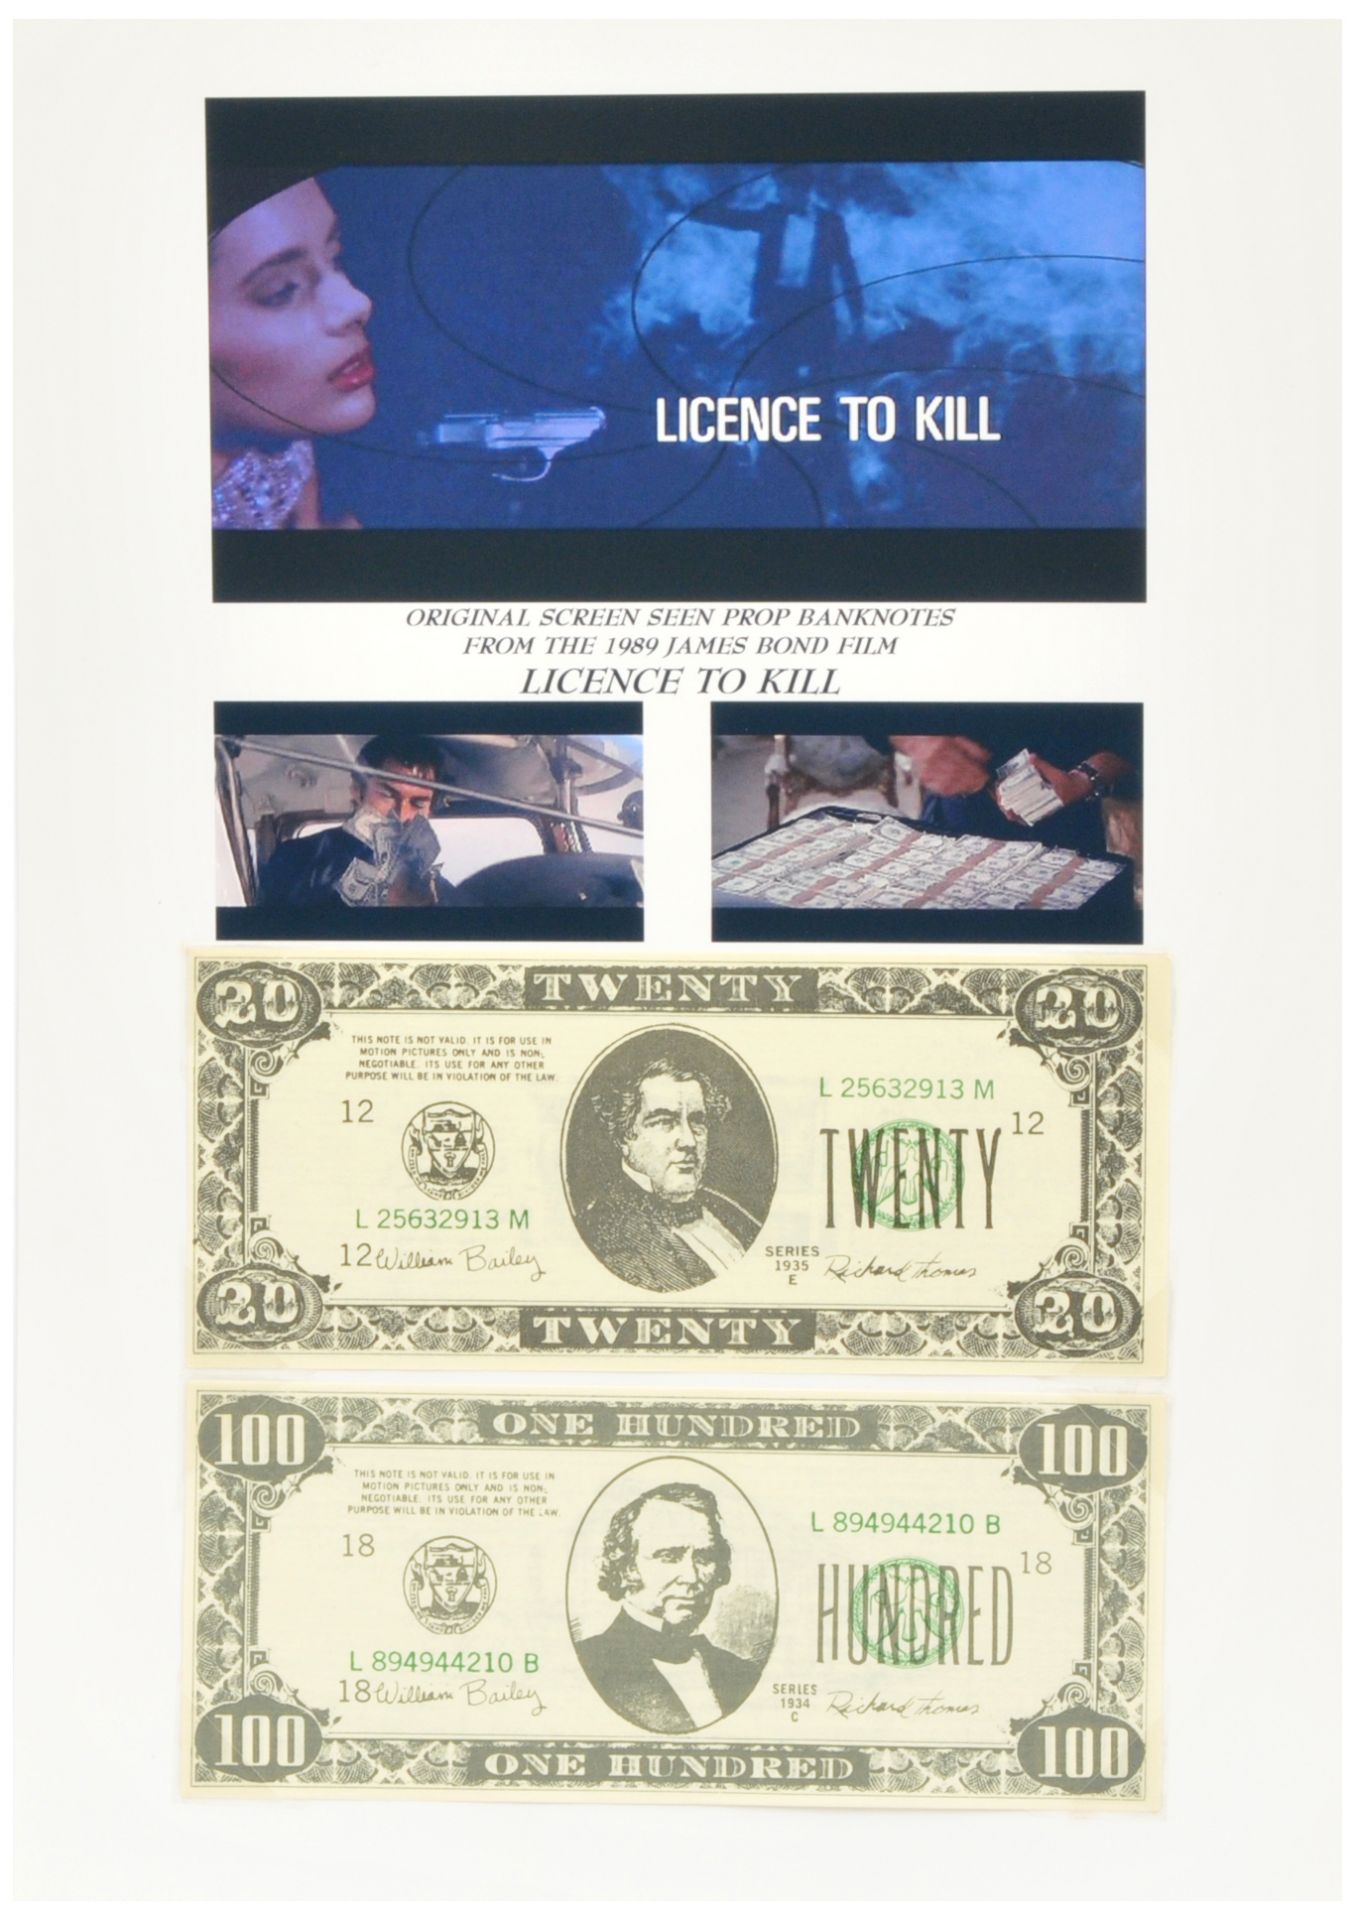 James Bond 007 Licence to Kill prop bank notes